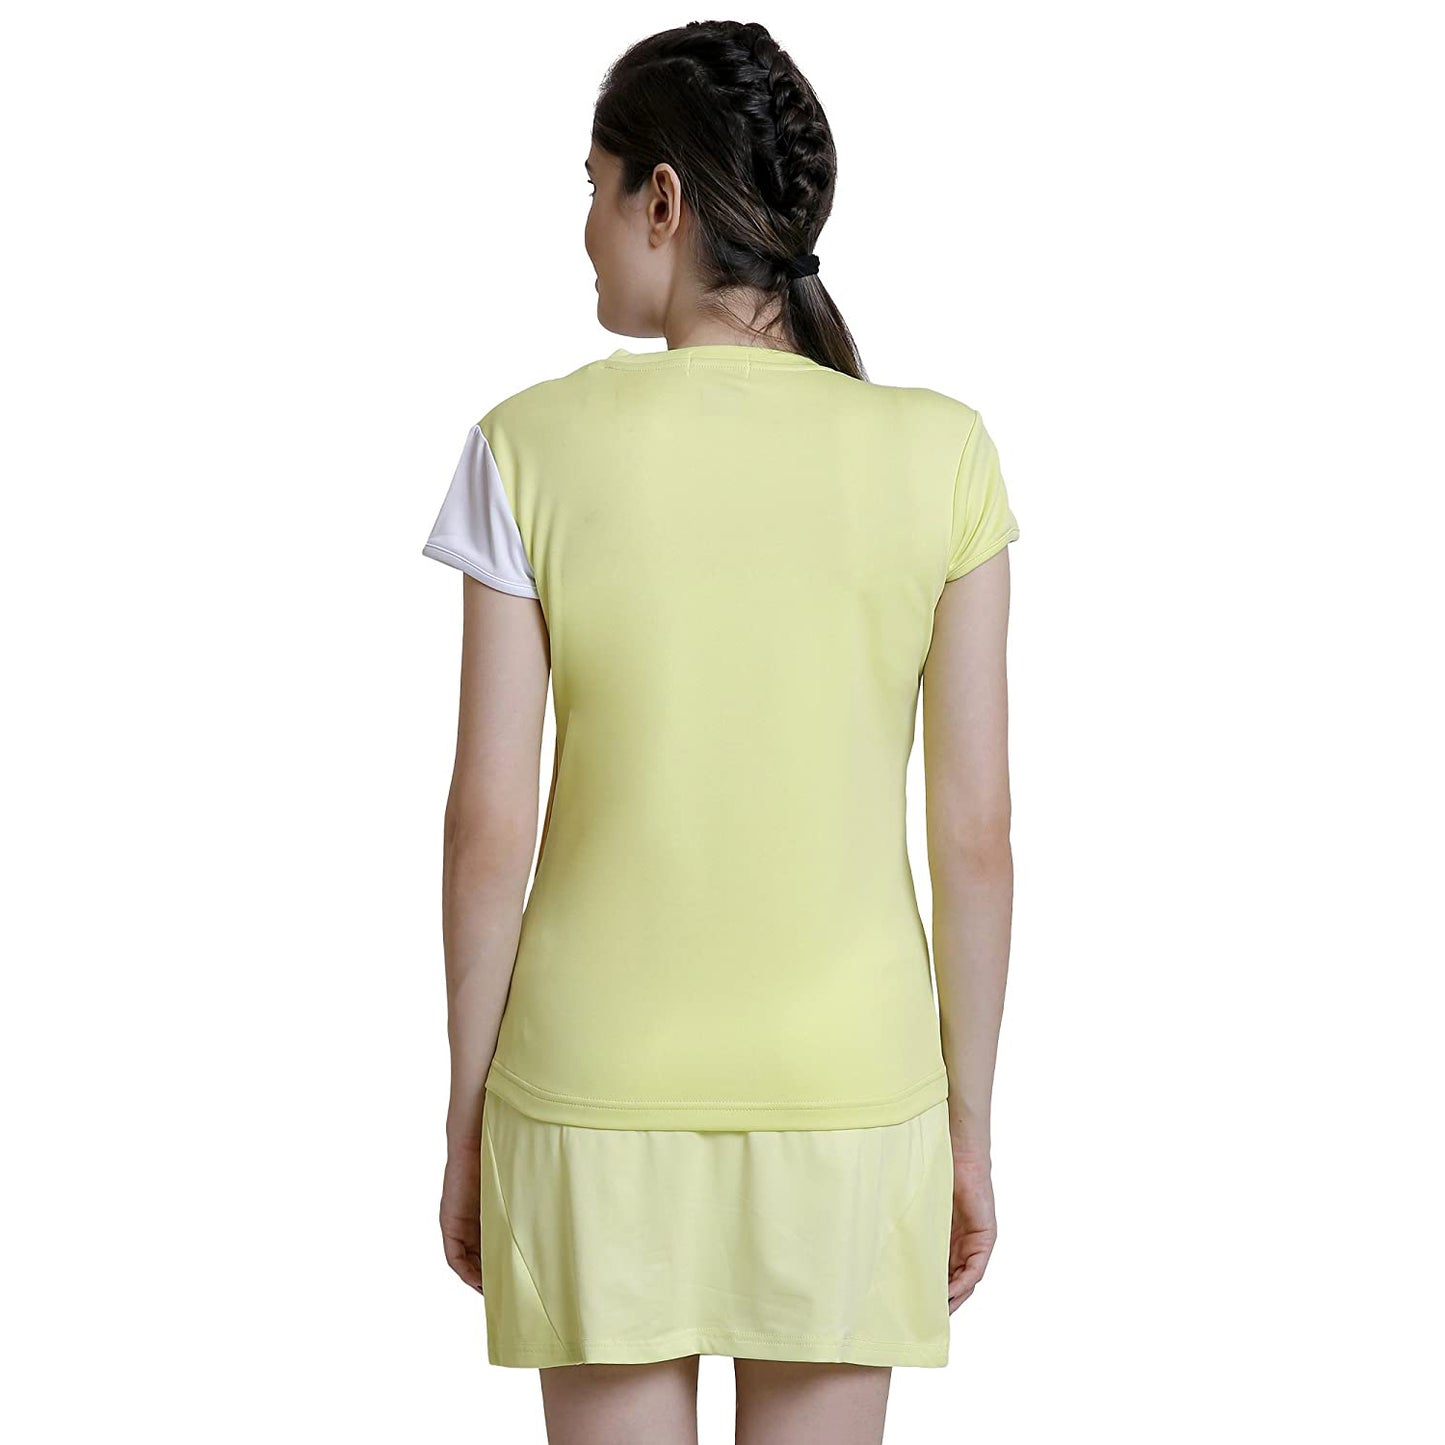 Yonex 856 Round Neck T Shirt for Women, Bright Lime - Best Price online Prokicksports.com